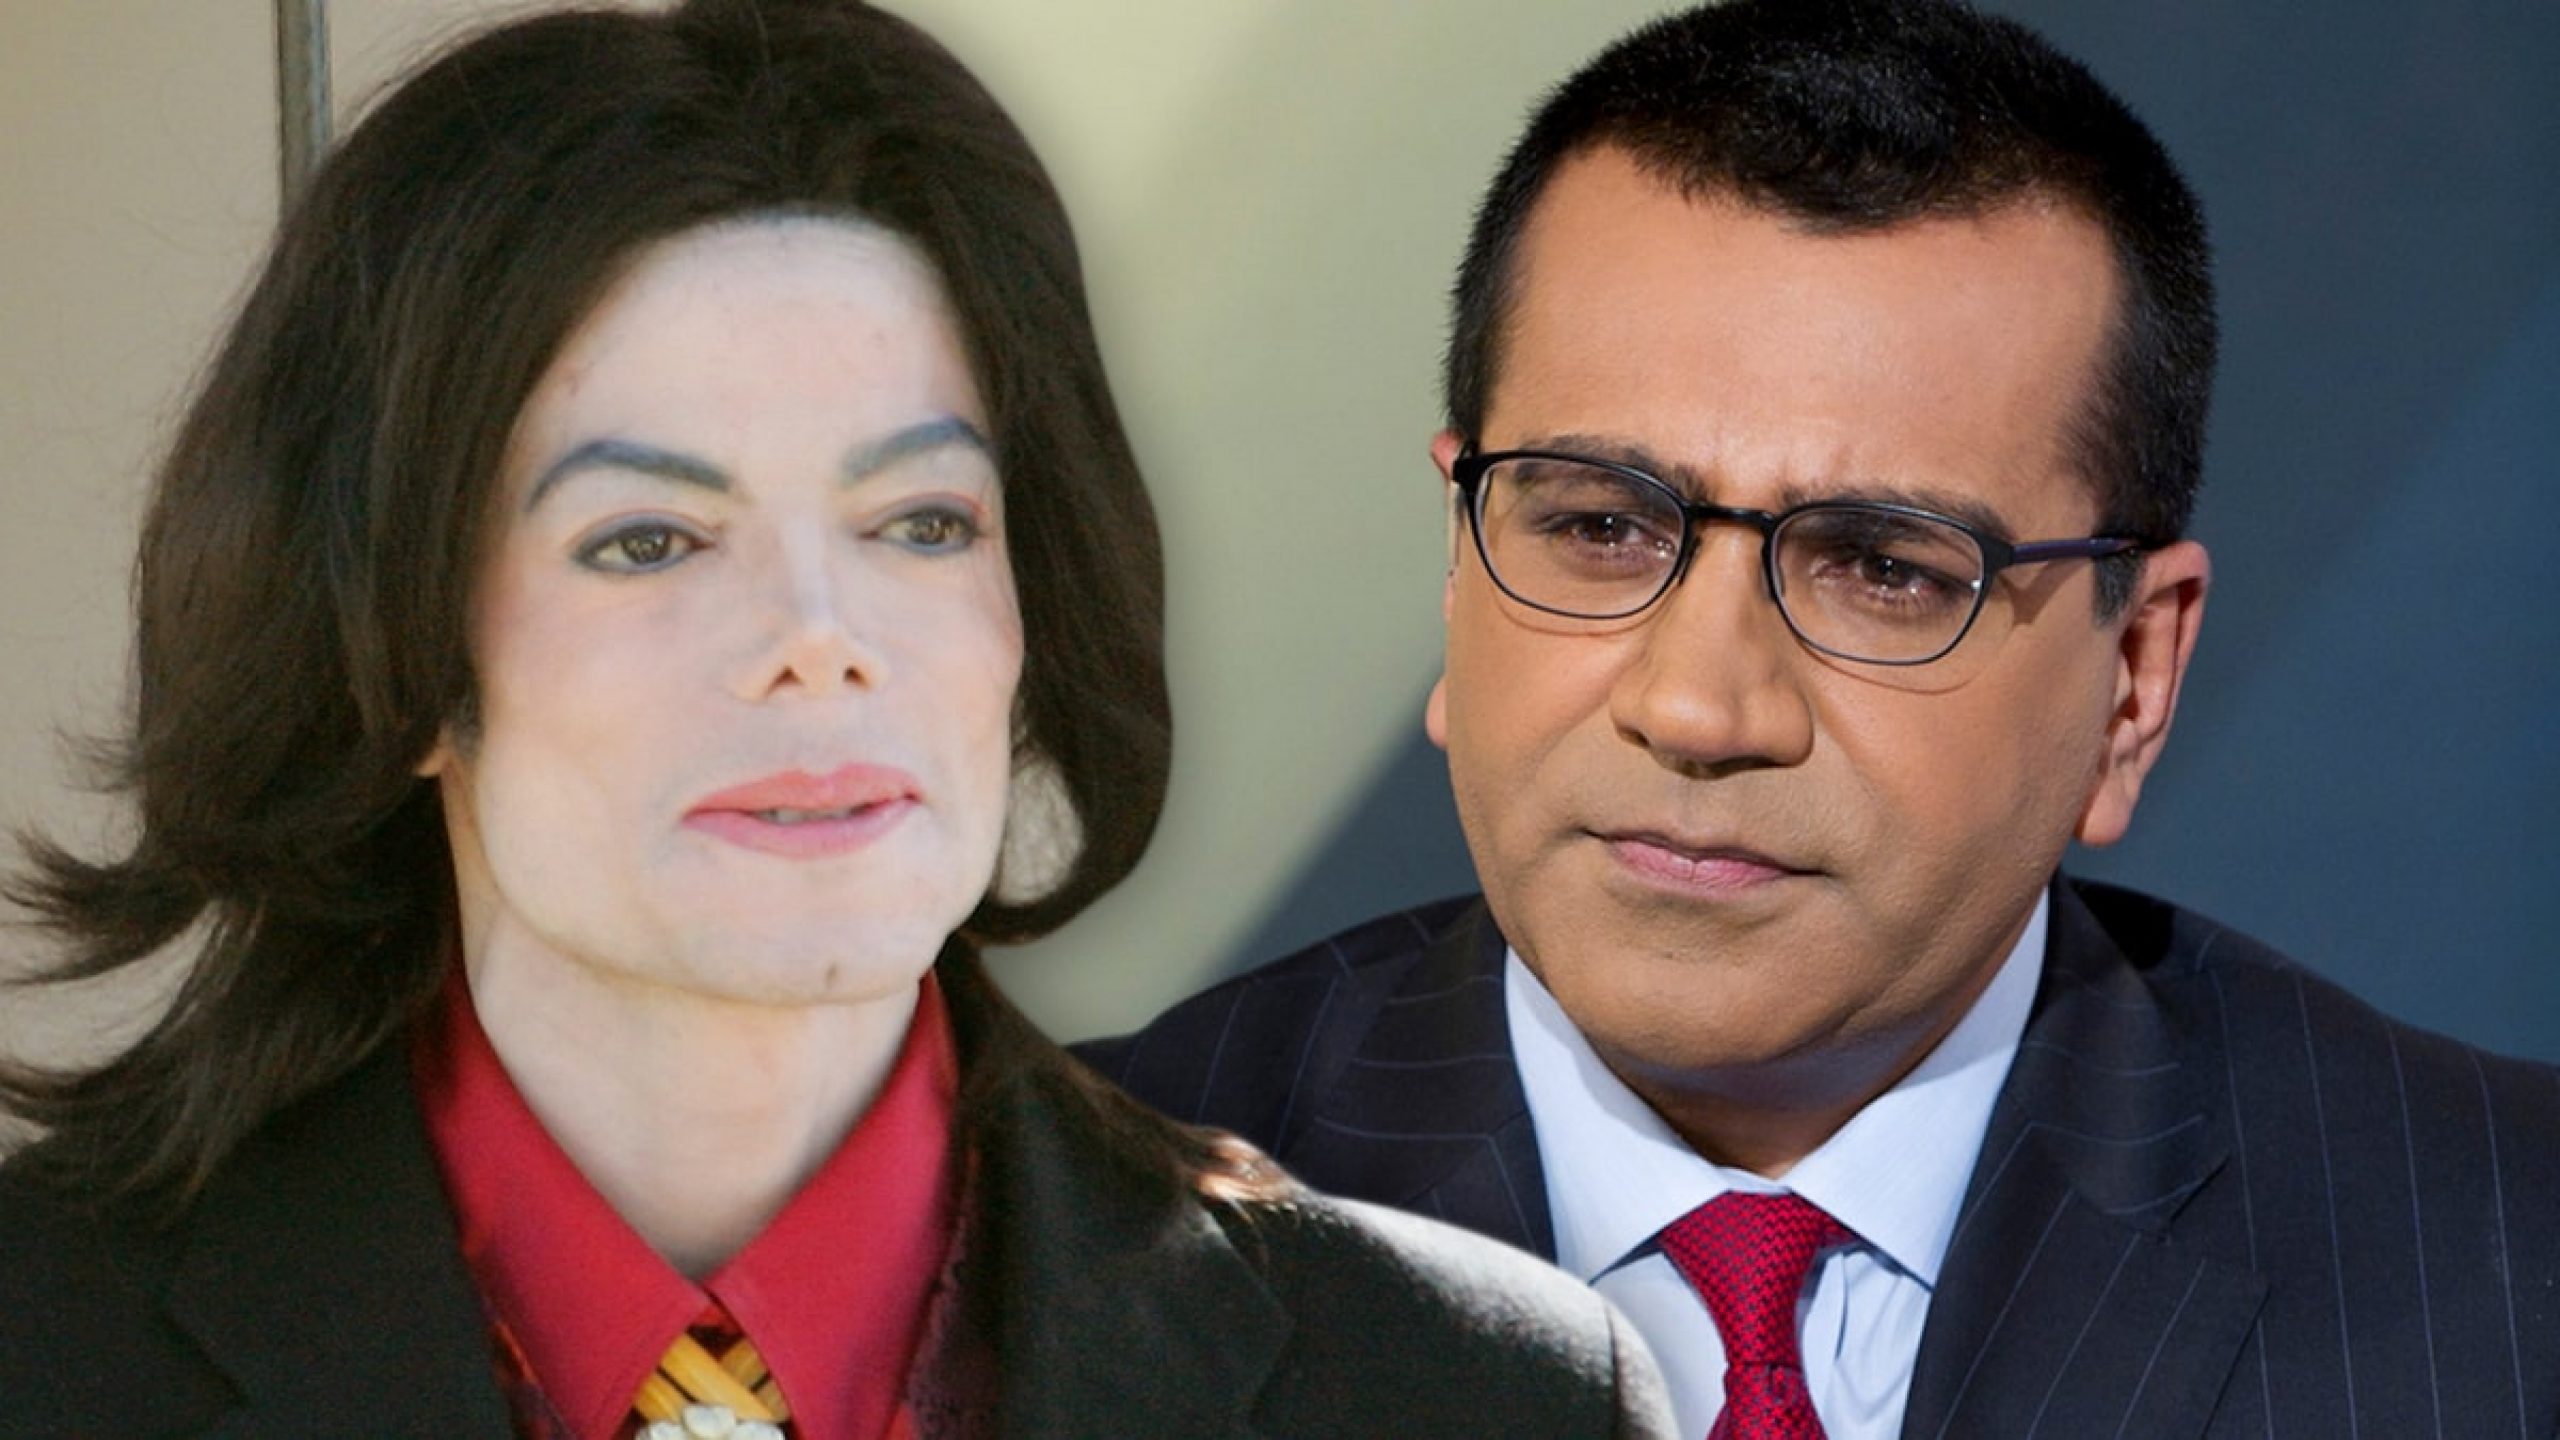 Michael Jackson’s Family Claims Martin Bashir Tricked MJ into Documentary